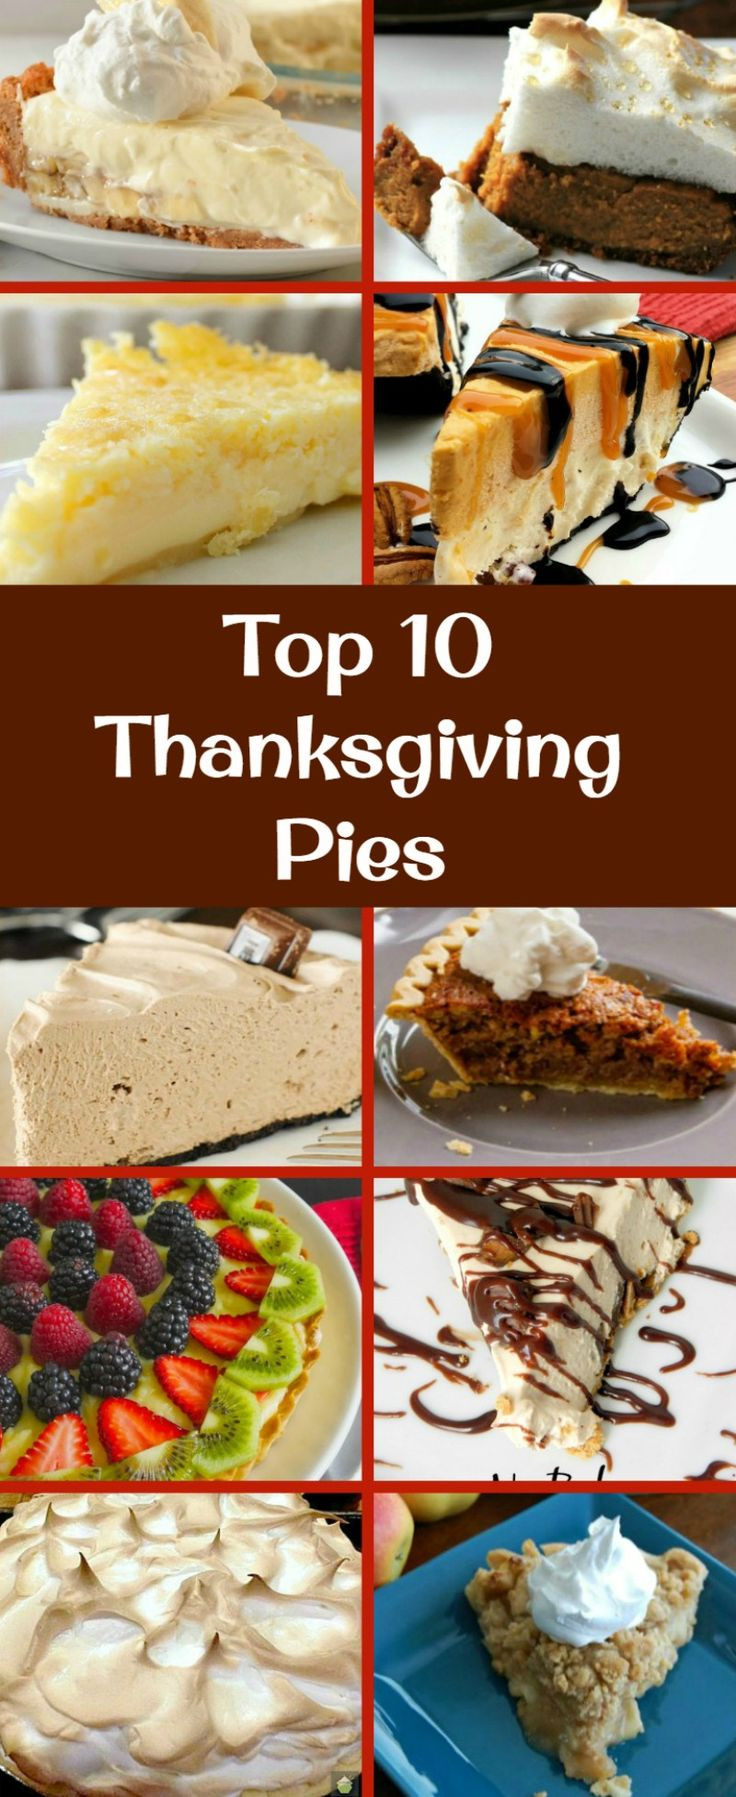 Great Thanksgiving Desserts
 25 best ideas about Best The Best on Pinterest